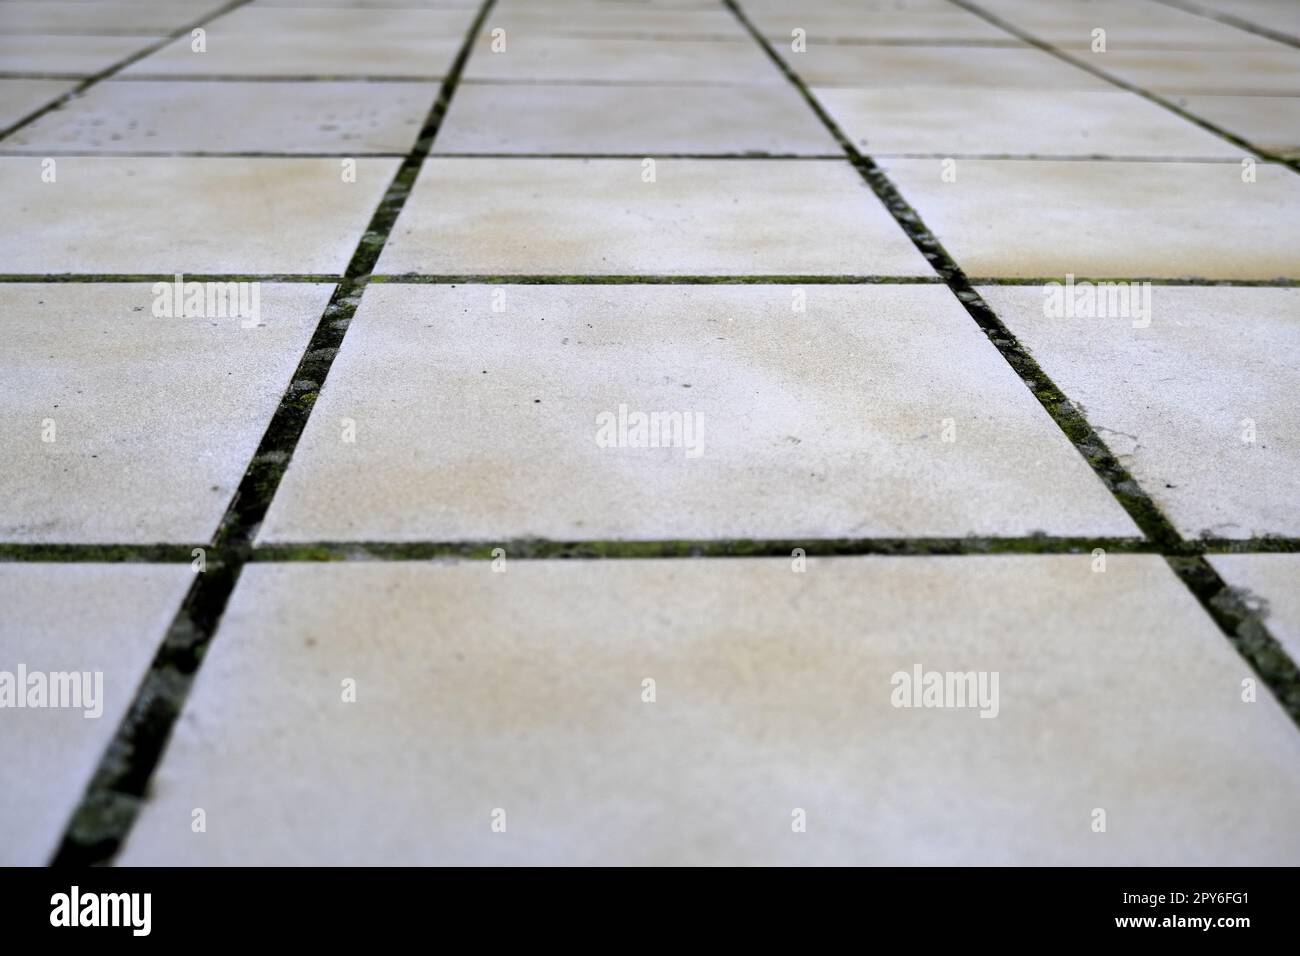 Street tiled floor Stock Photo